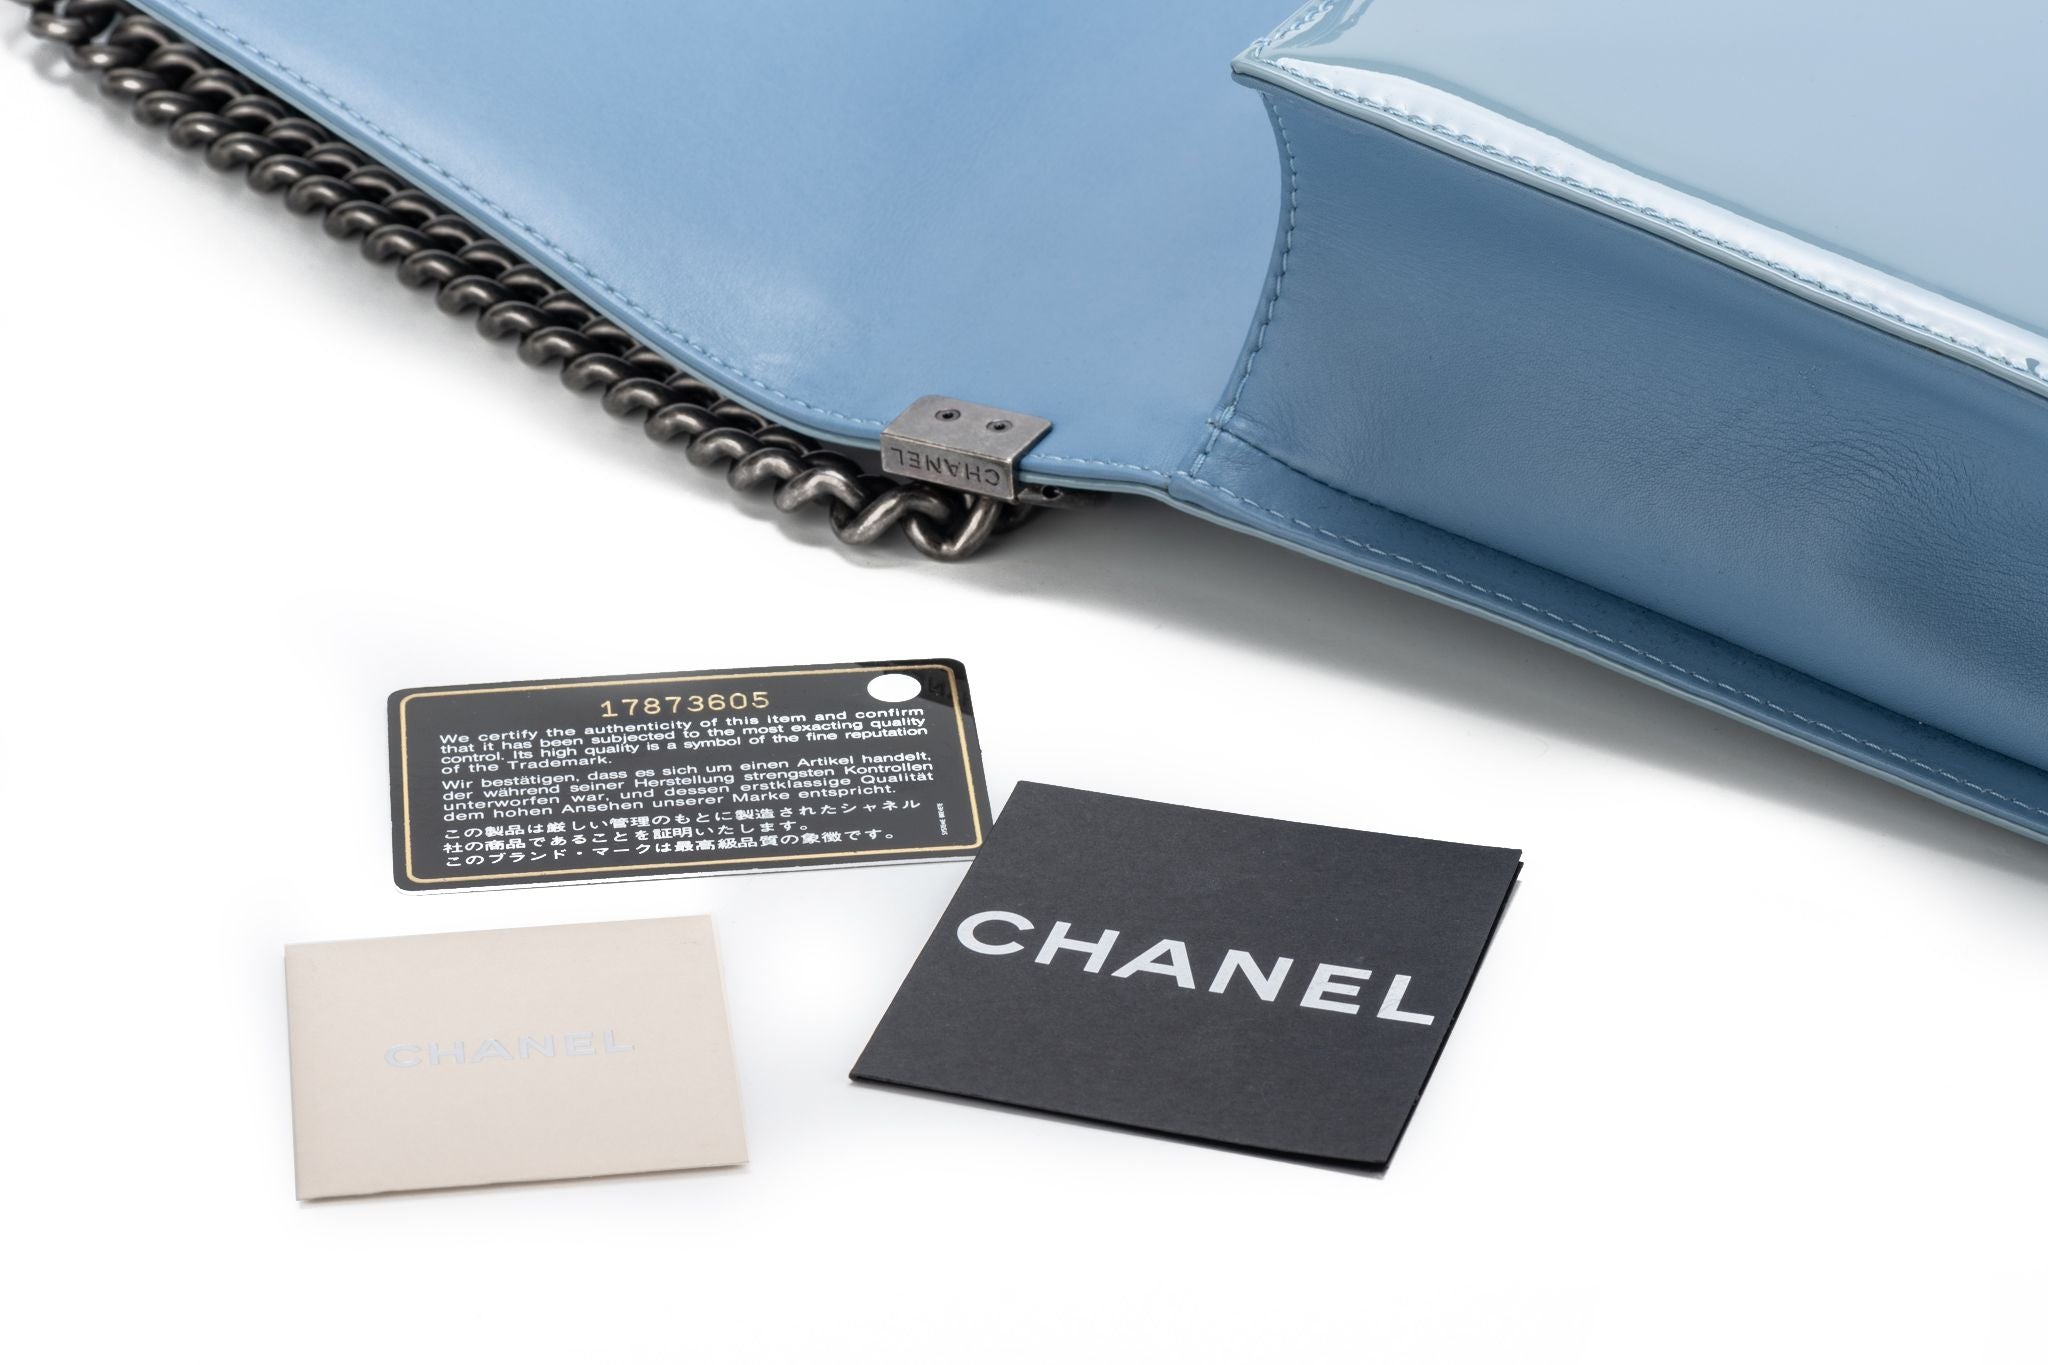 Chanel Medium Gold Metallic Limited Edition Bag